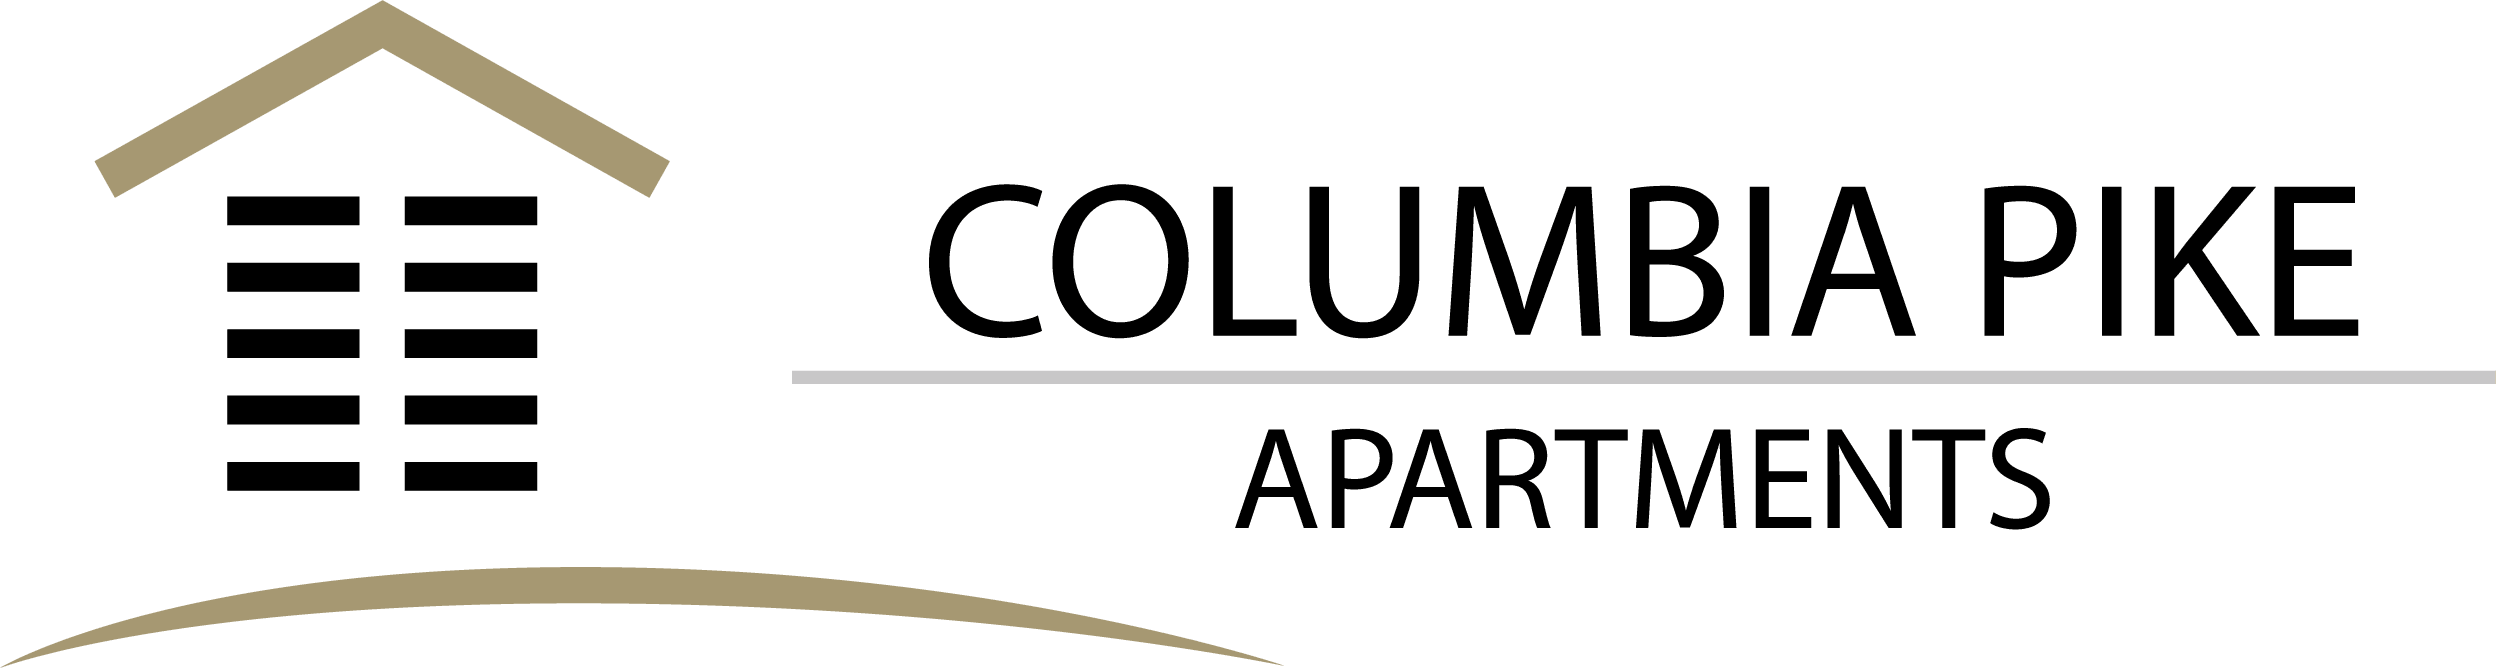 Columbia Pike Apartments